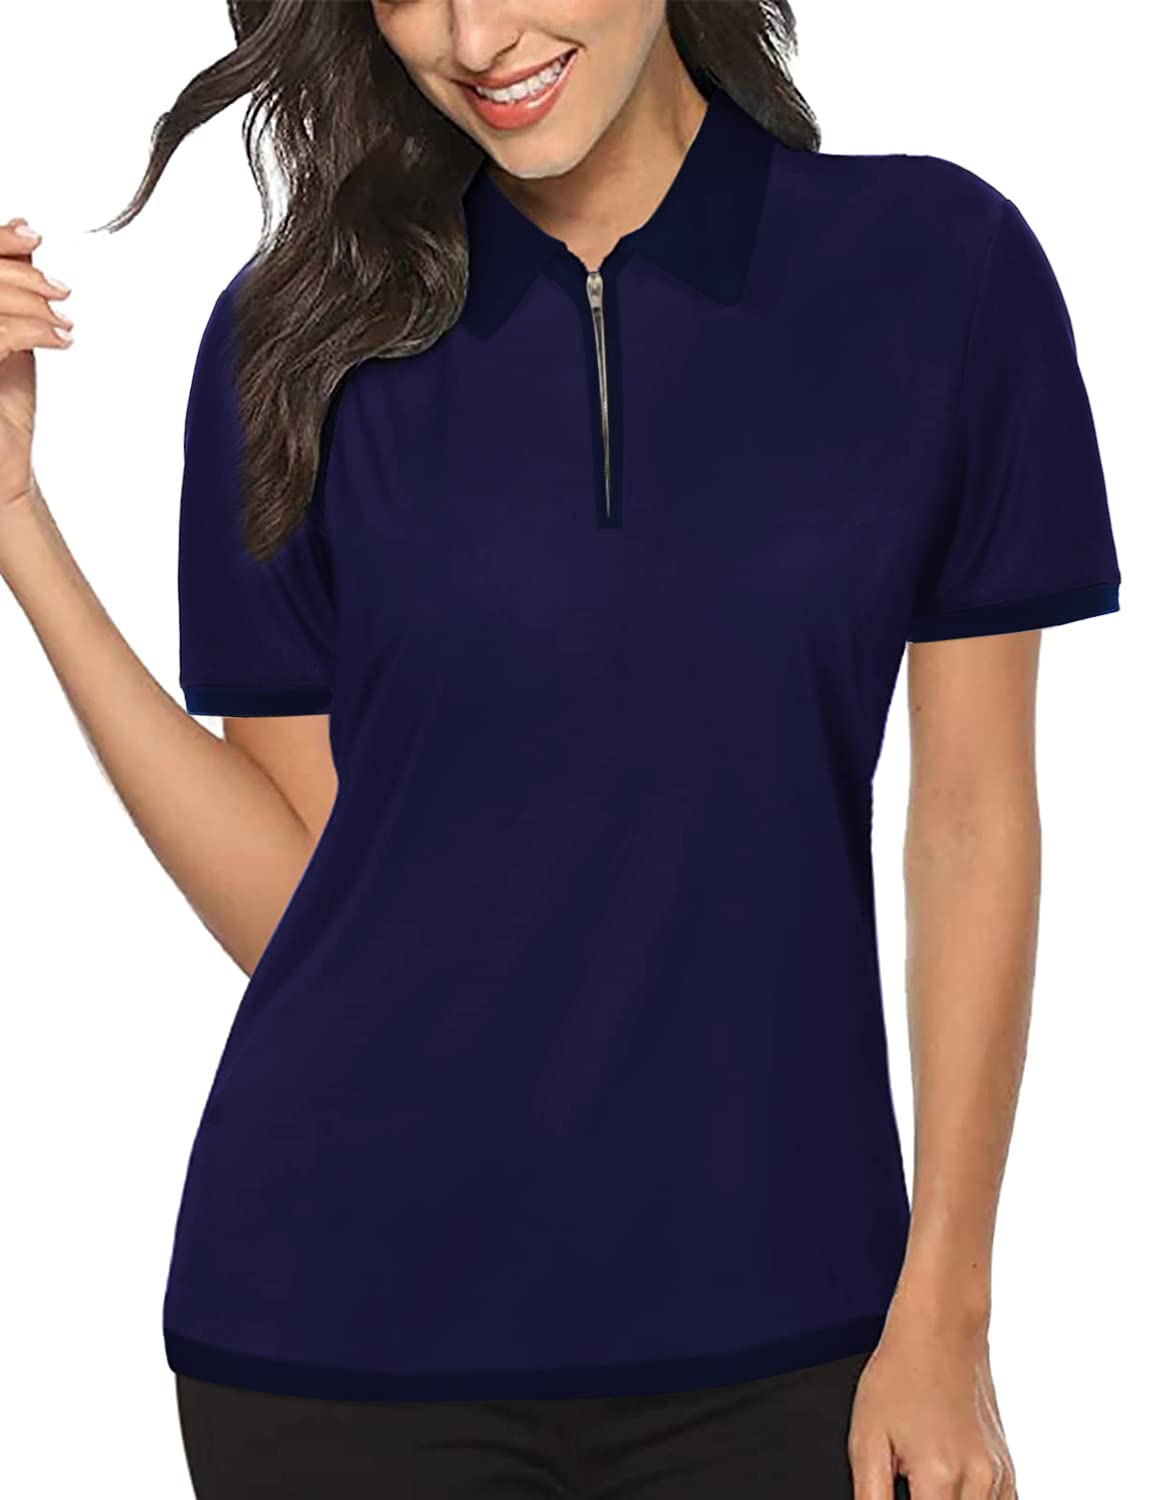 YESFASHION Polo Shirts for Women Golf Tops Black